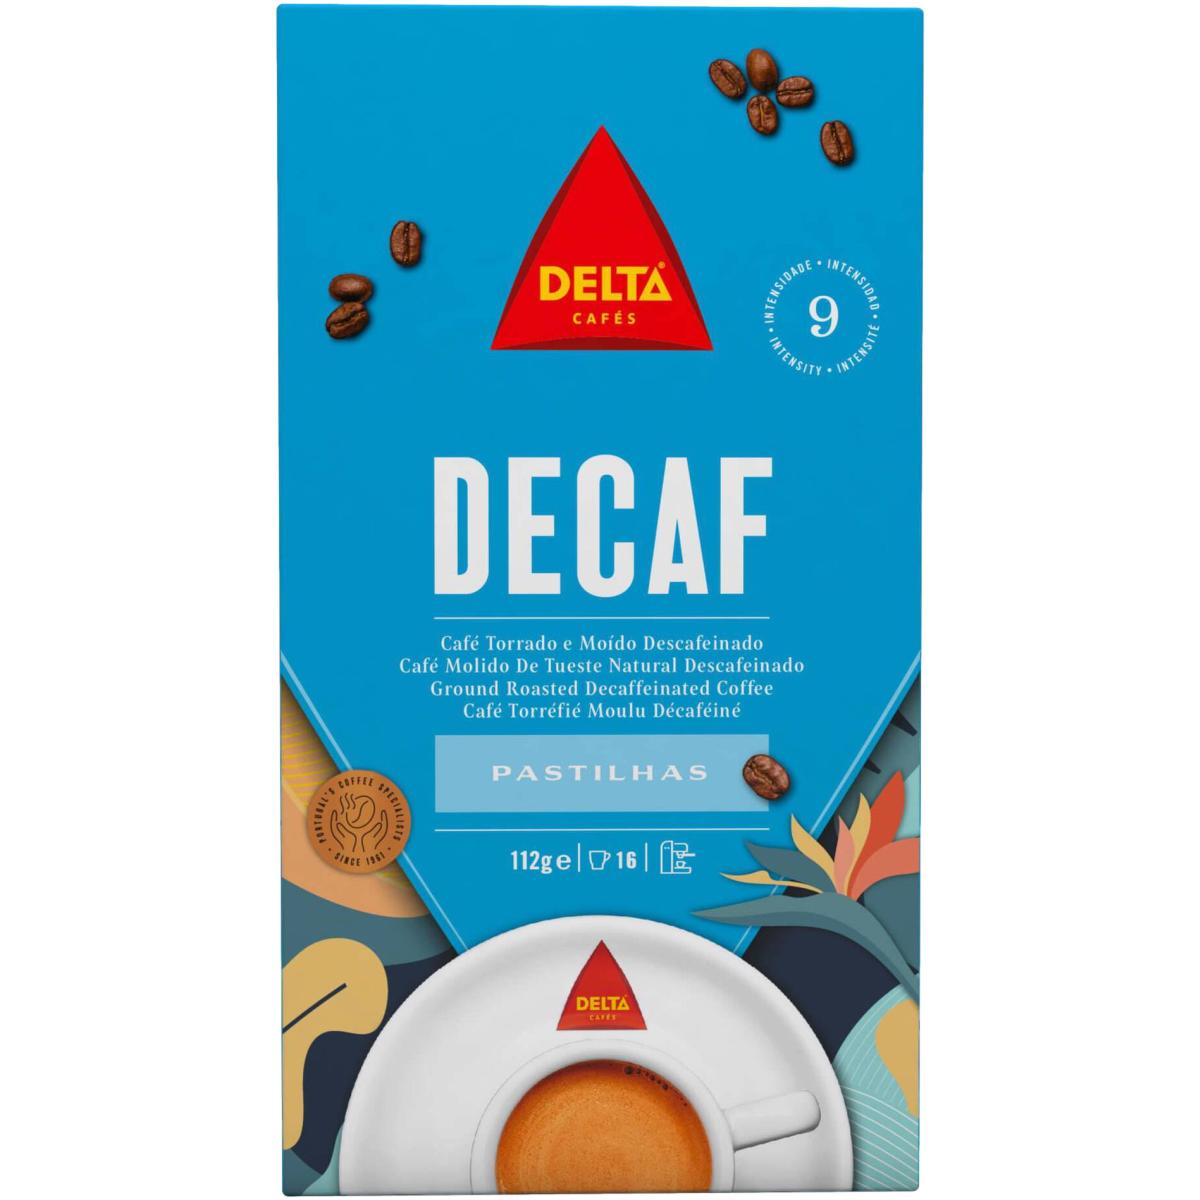 Delta Platinum Coffee Pod 16 units